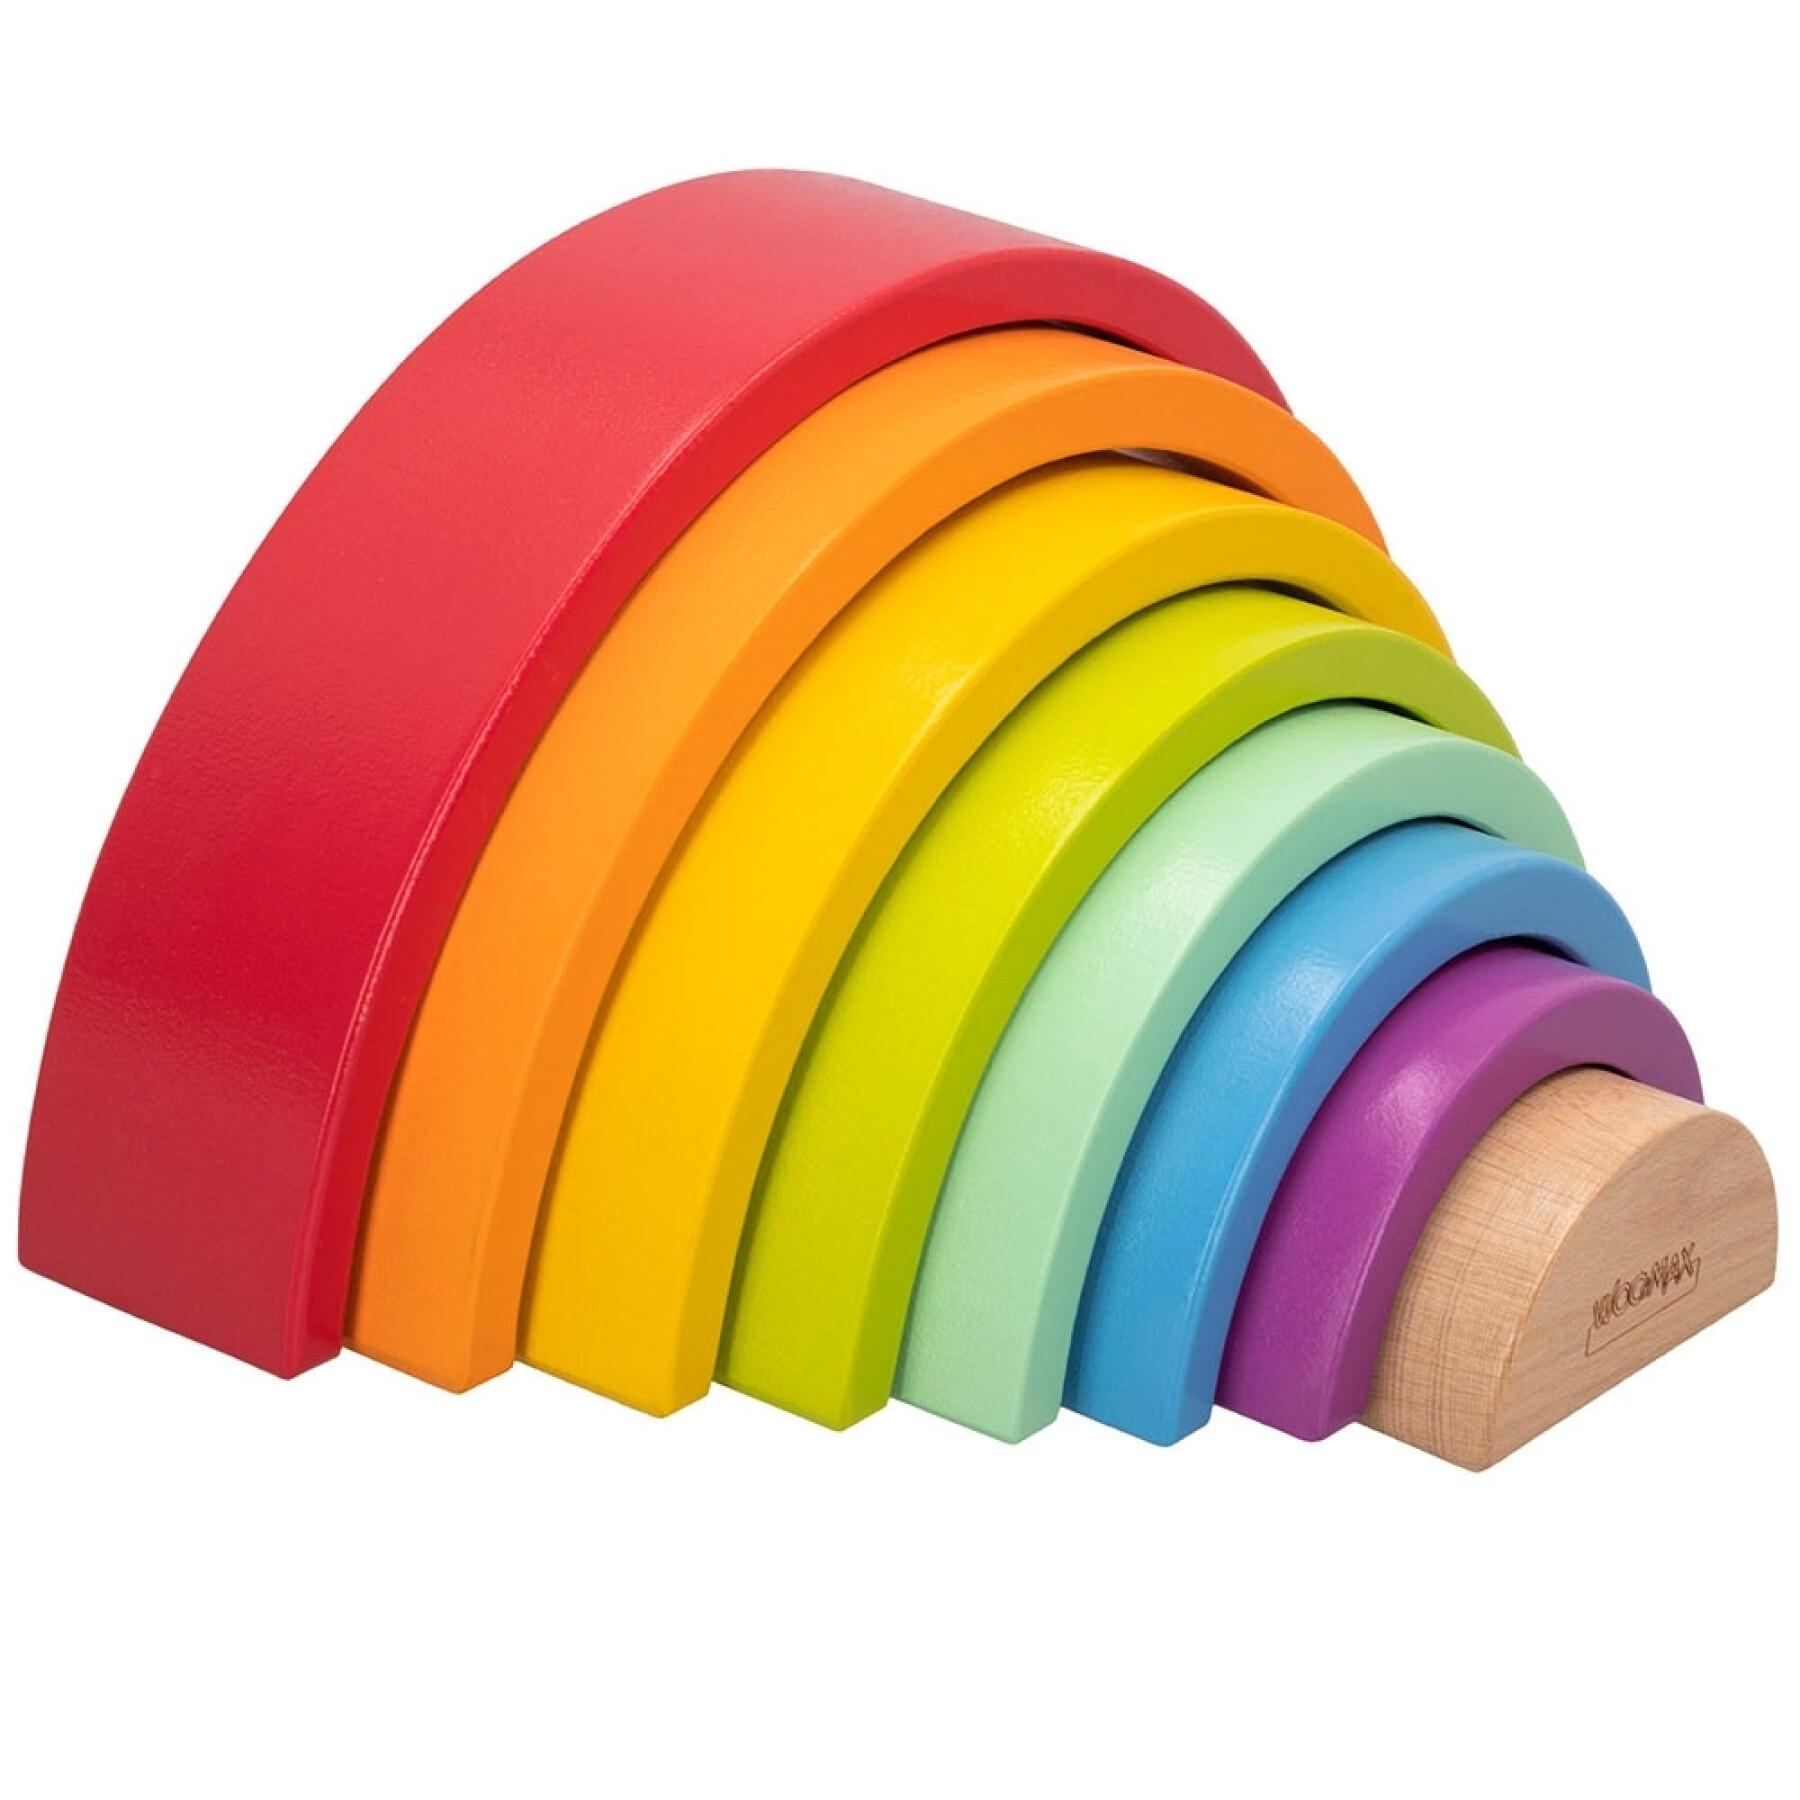 Regenbogenschnürsenkel aus Holz - 8 Stück Woomax Eco